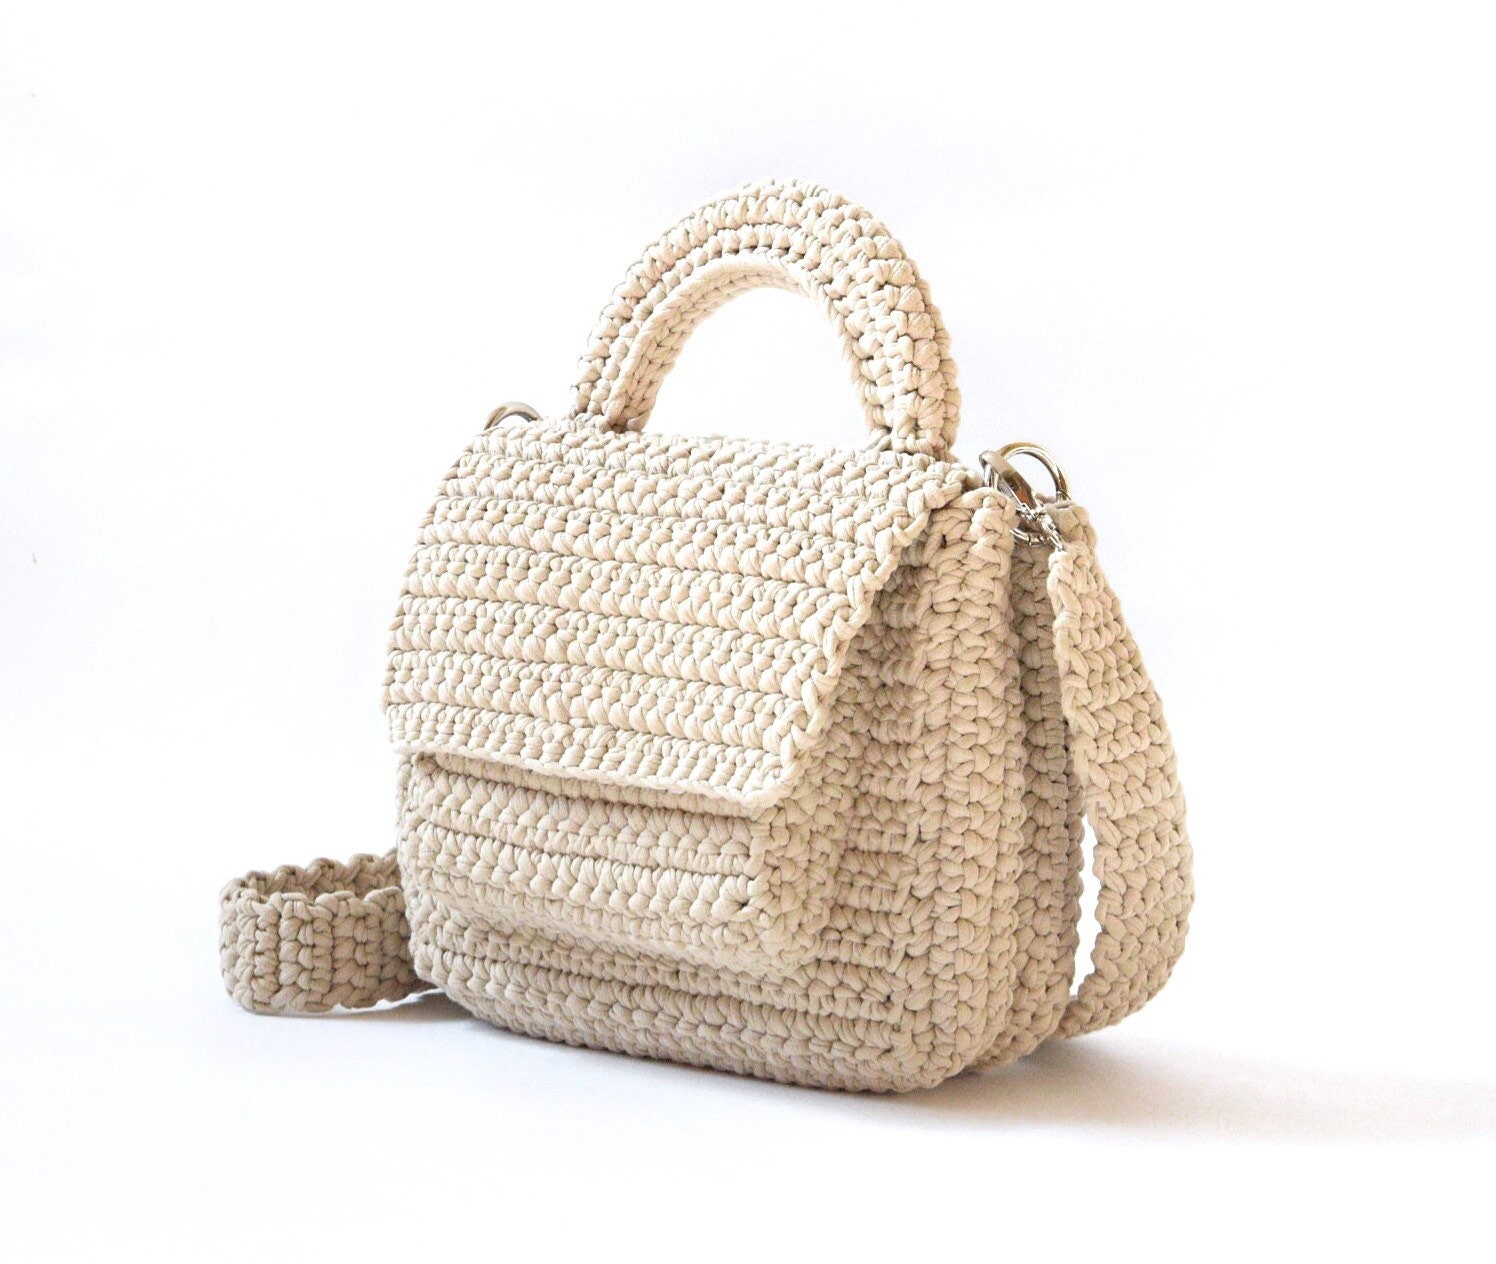 Vegan bag Beige crochet handbag boho bag fashion designer | Etsy